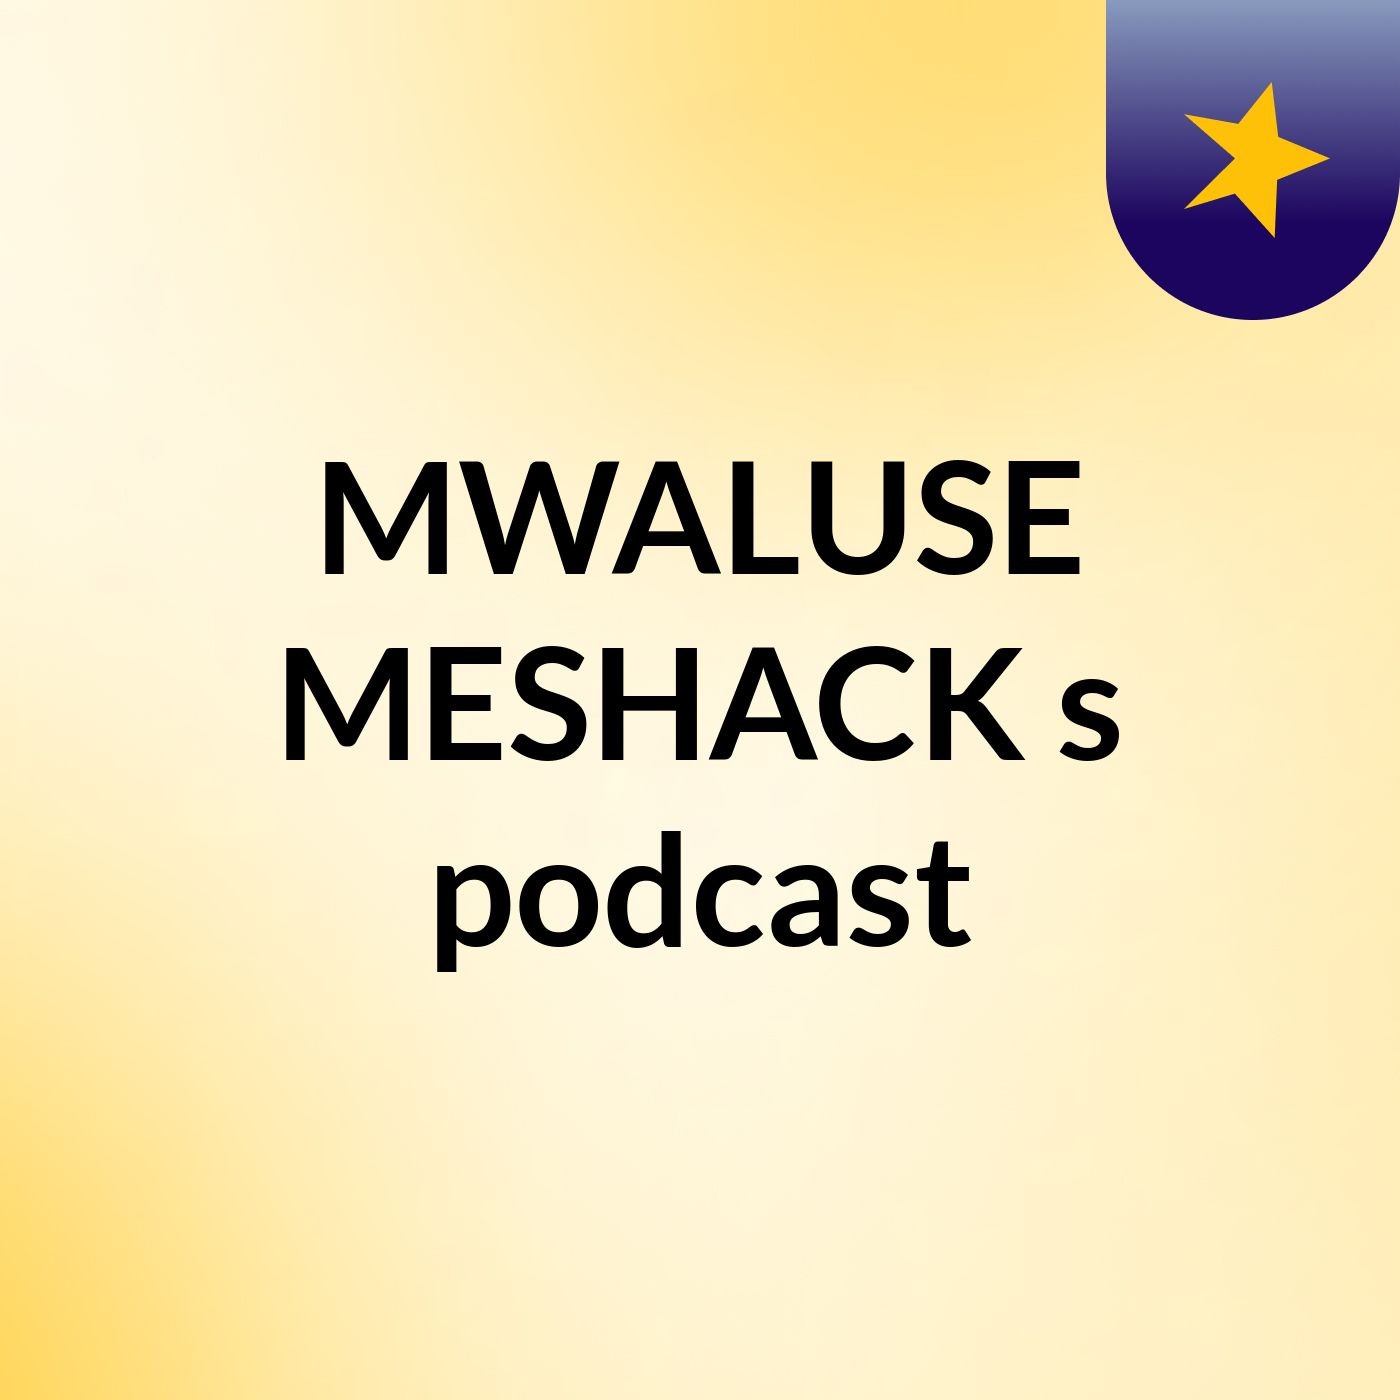 Episode 2 - MWALUSE MESHACK's podcast